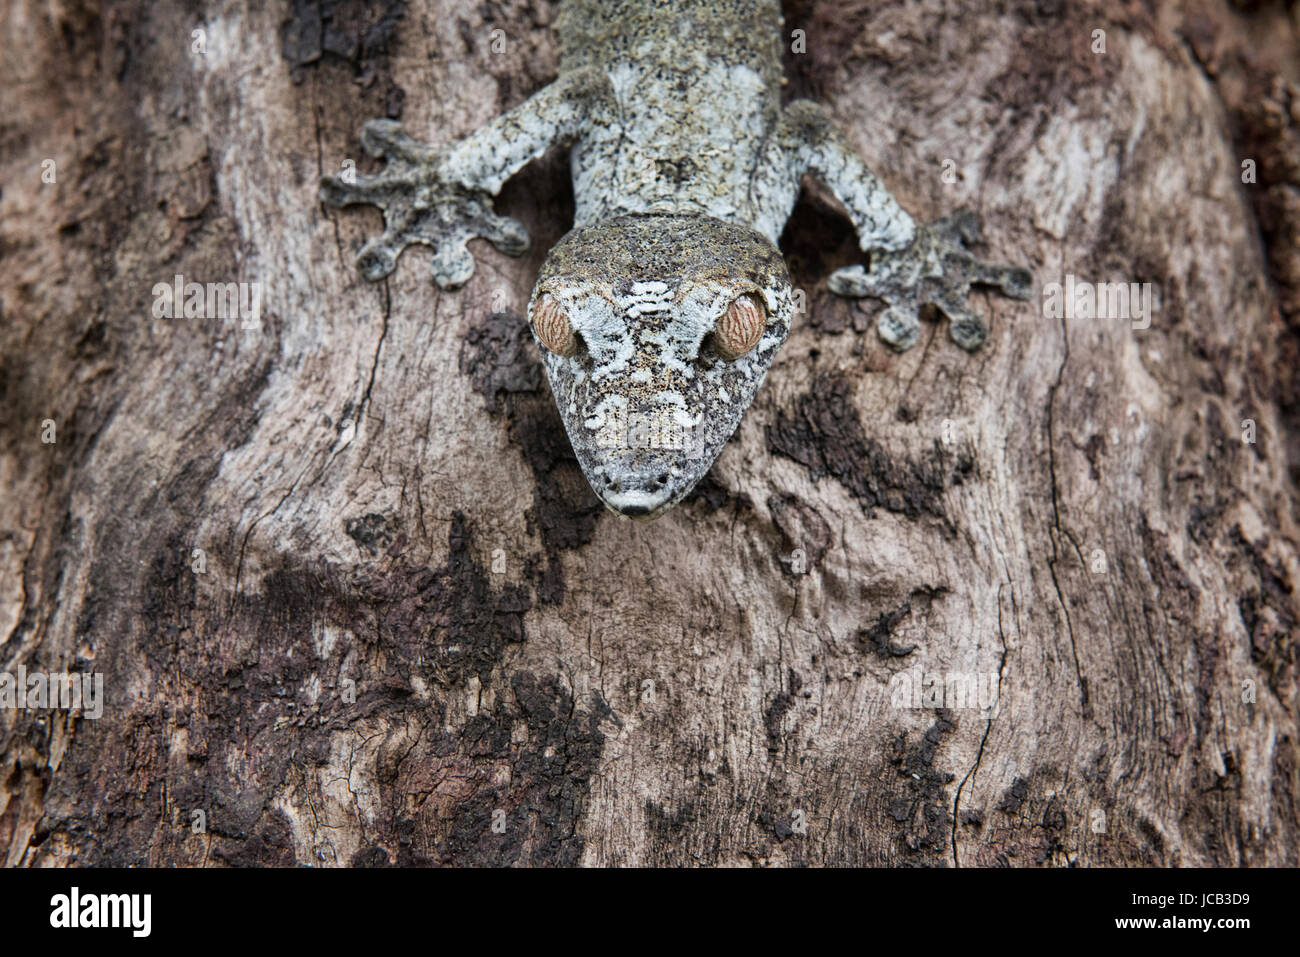 Moosigen Blatt-tailed Gecko (Uroplatus Sikorae), Andasibe-Mantadia Nationalpark, Madagaskar Stockfoto